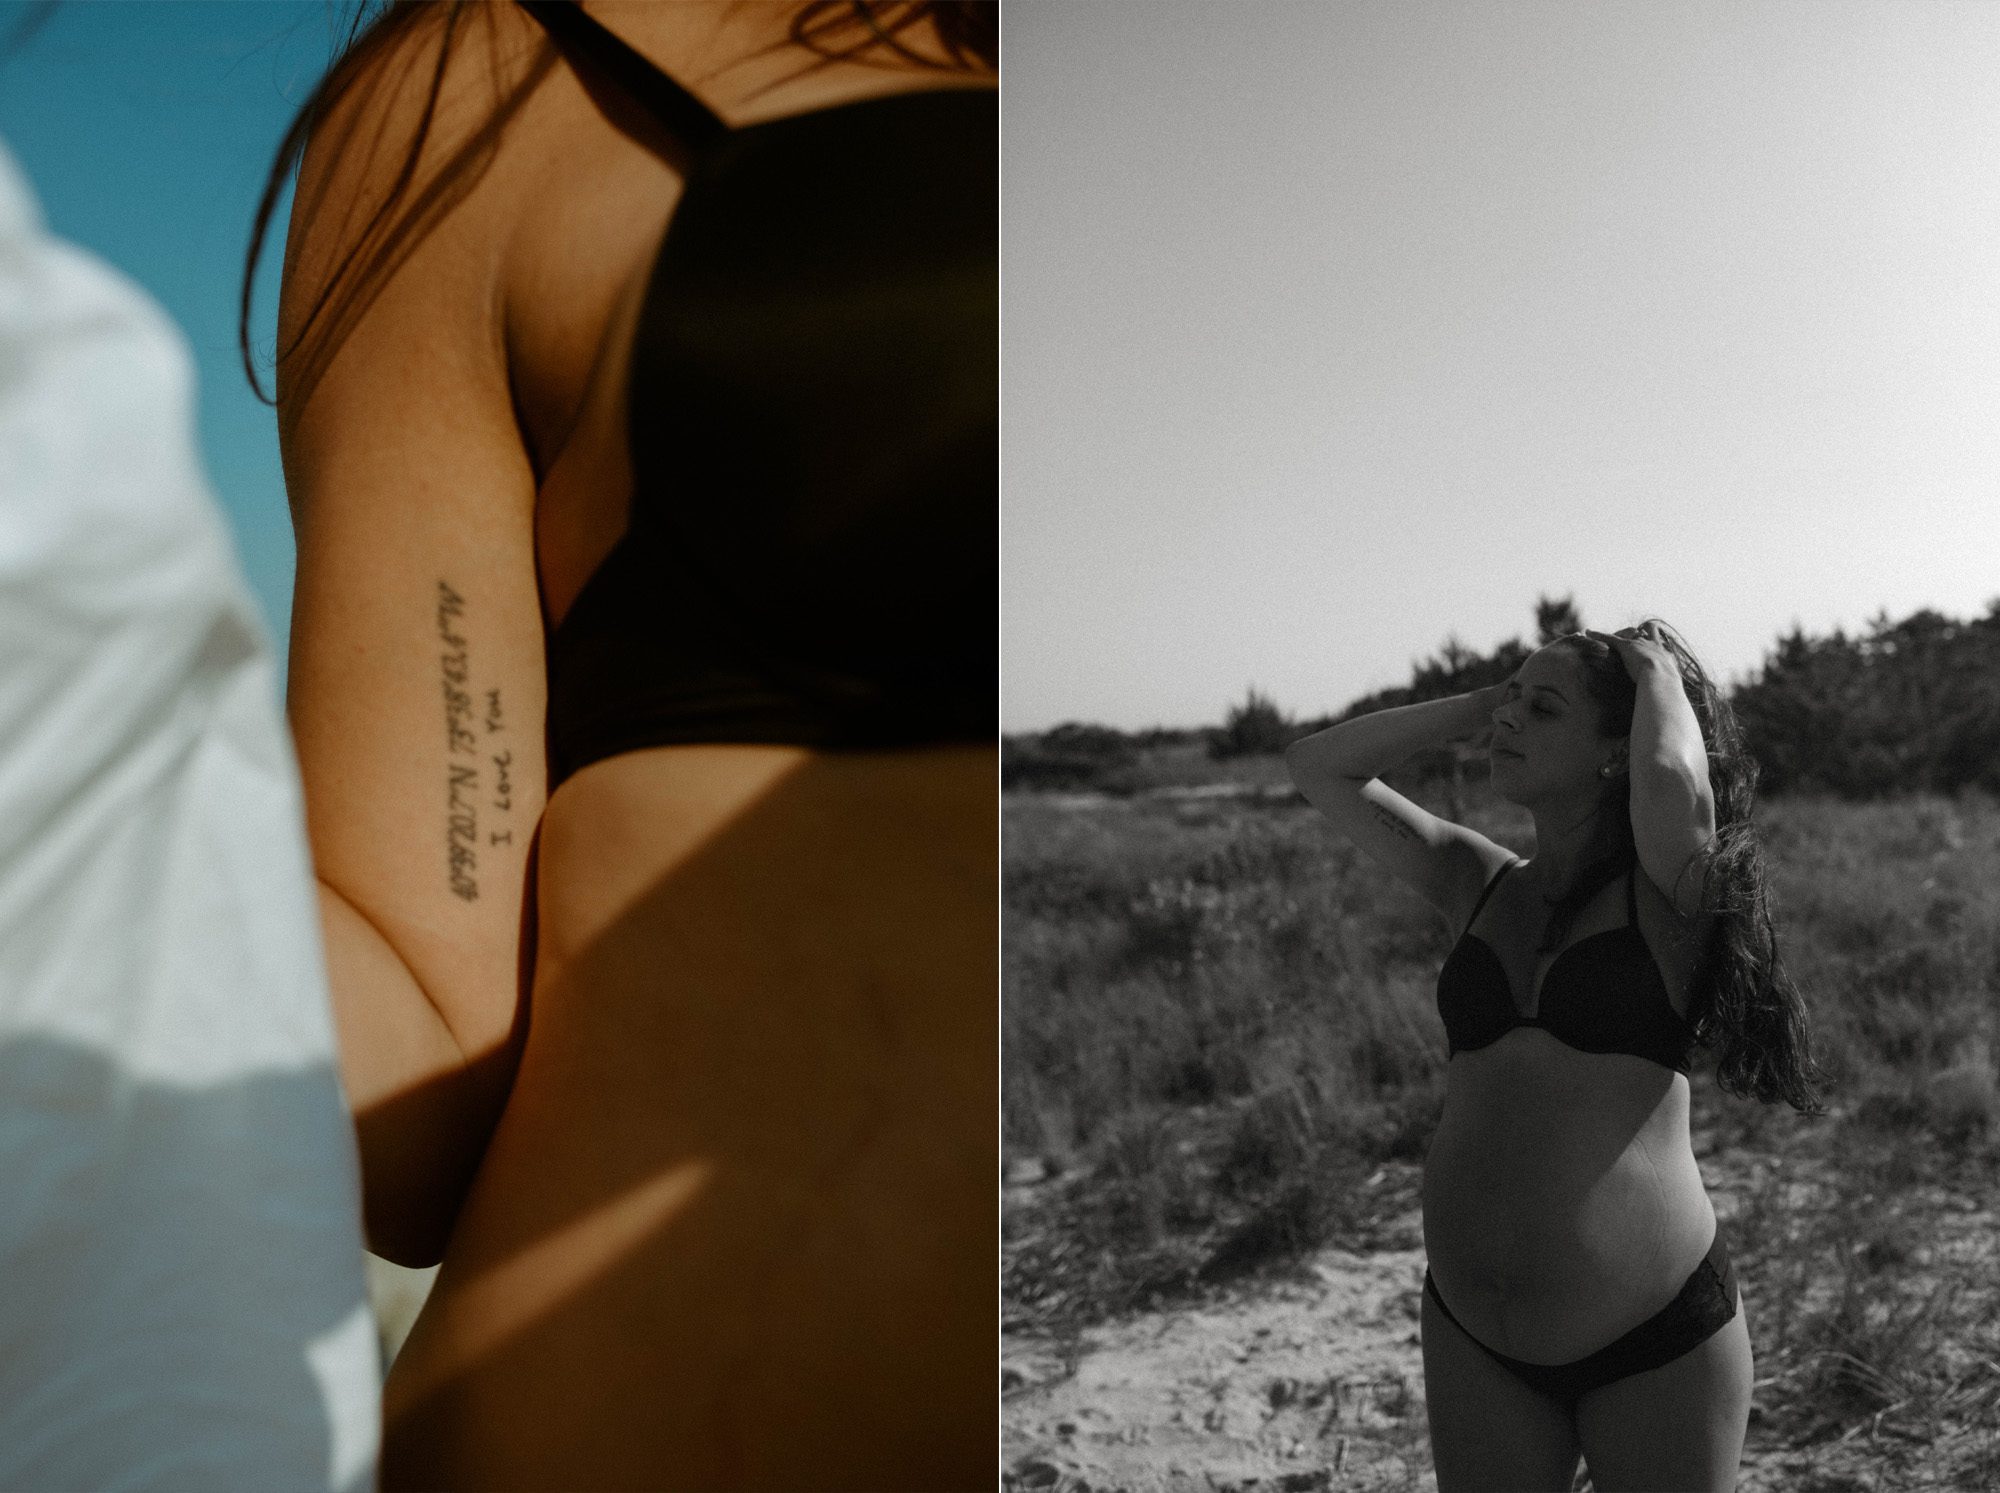 Pregnant woman beach maternity photos simple tattoos long hair.Beach Maternity Portraits